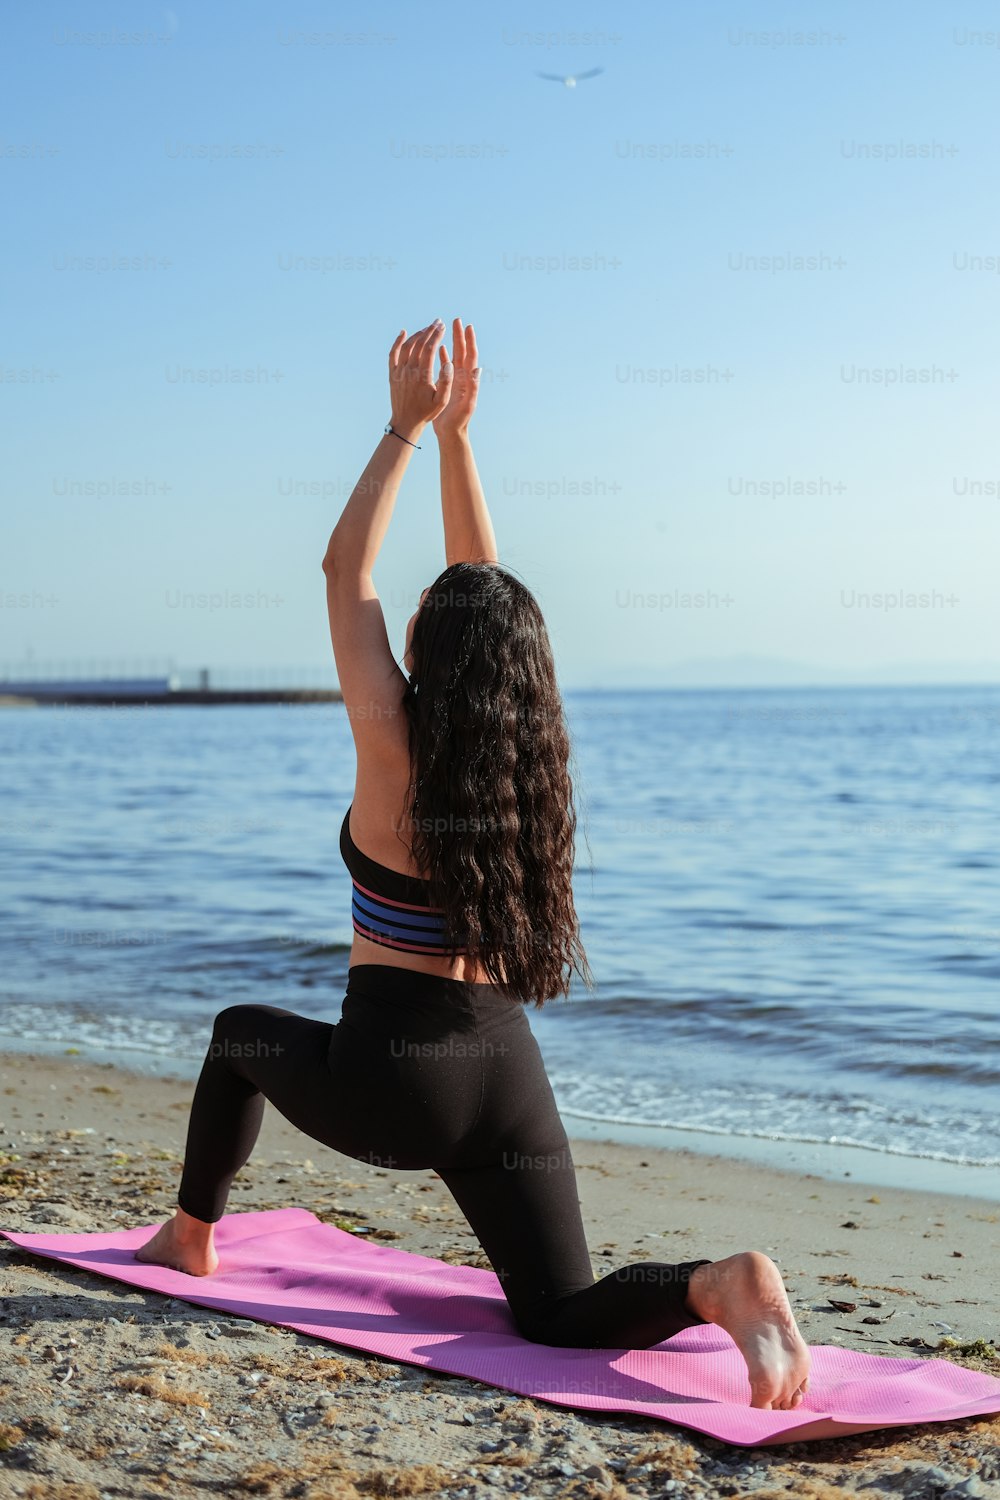 A woman doing yoga on a pink mat on the beach photo – Yoga pants